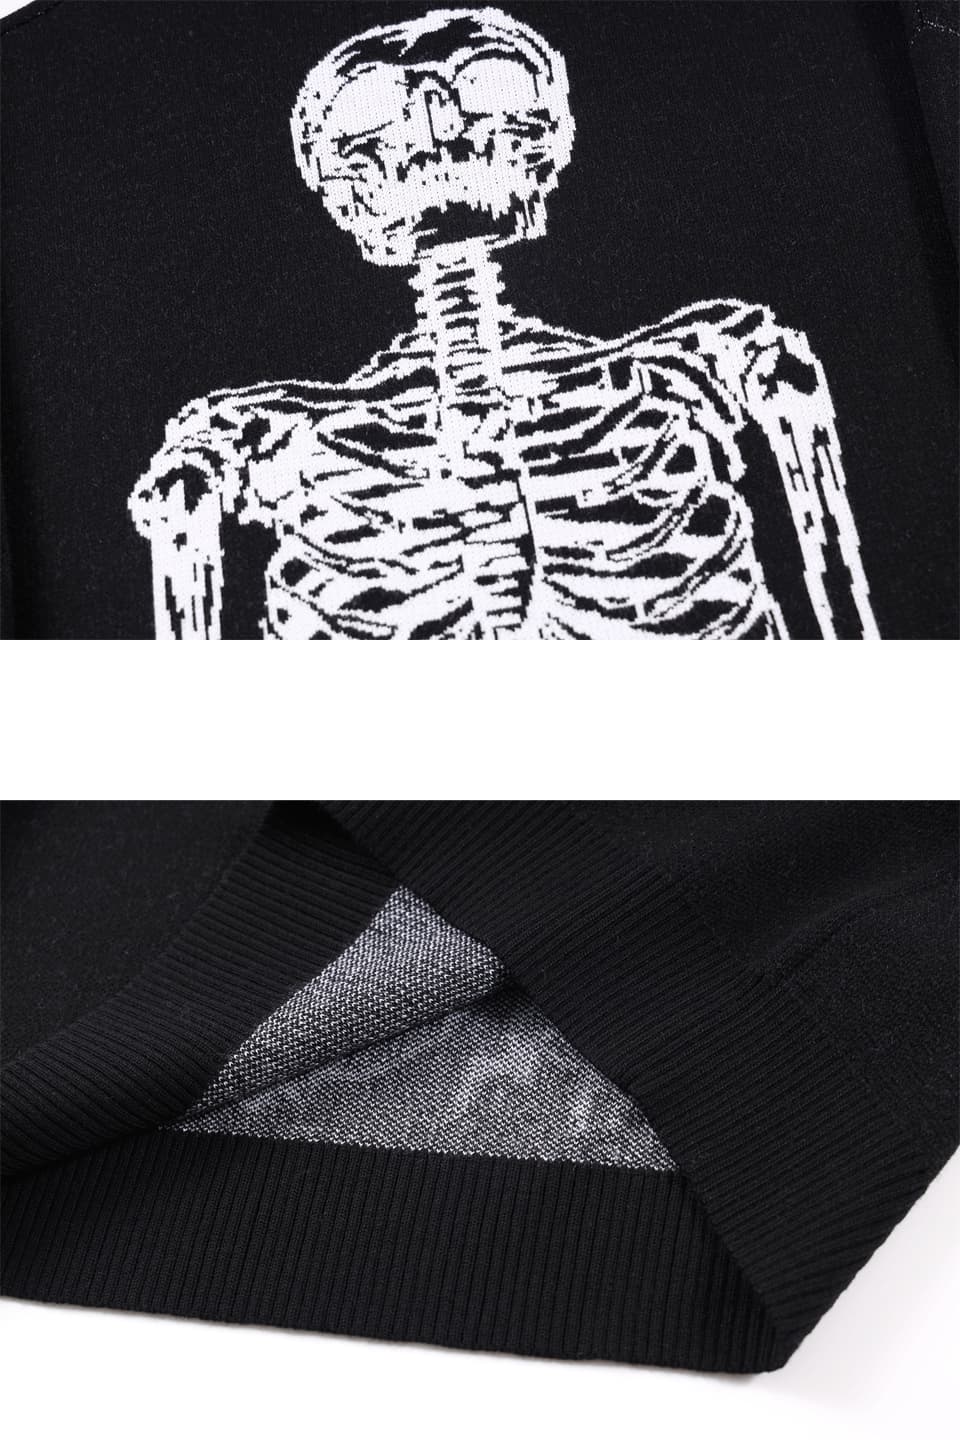 UNKNOWN X HCW Black Skeleton Knitwear